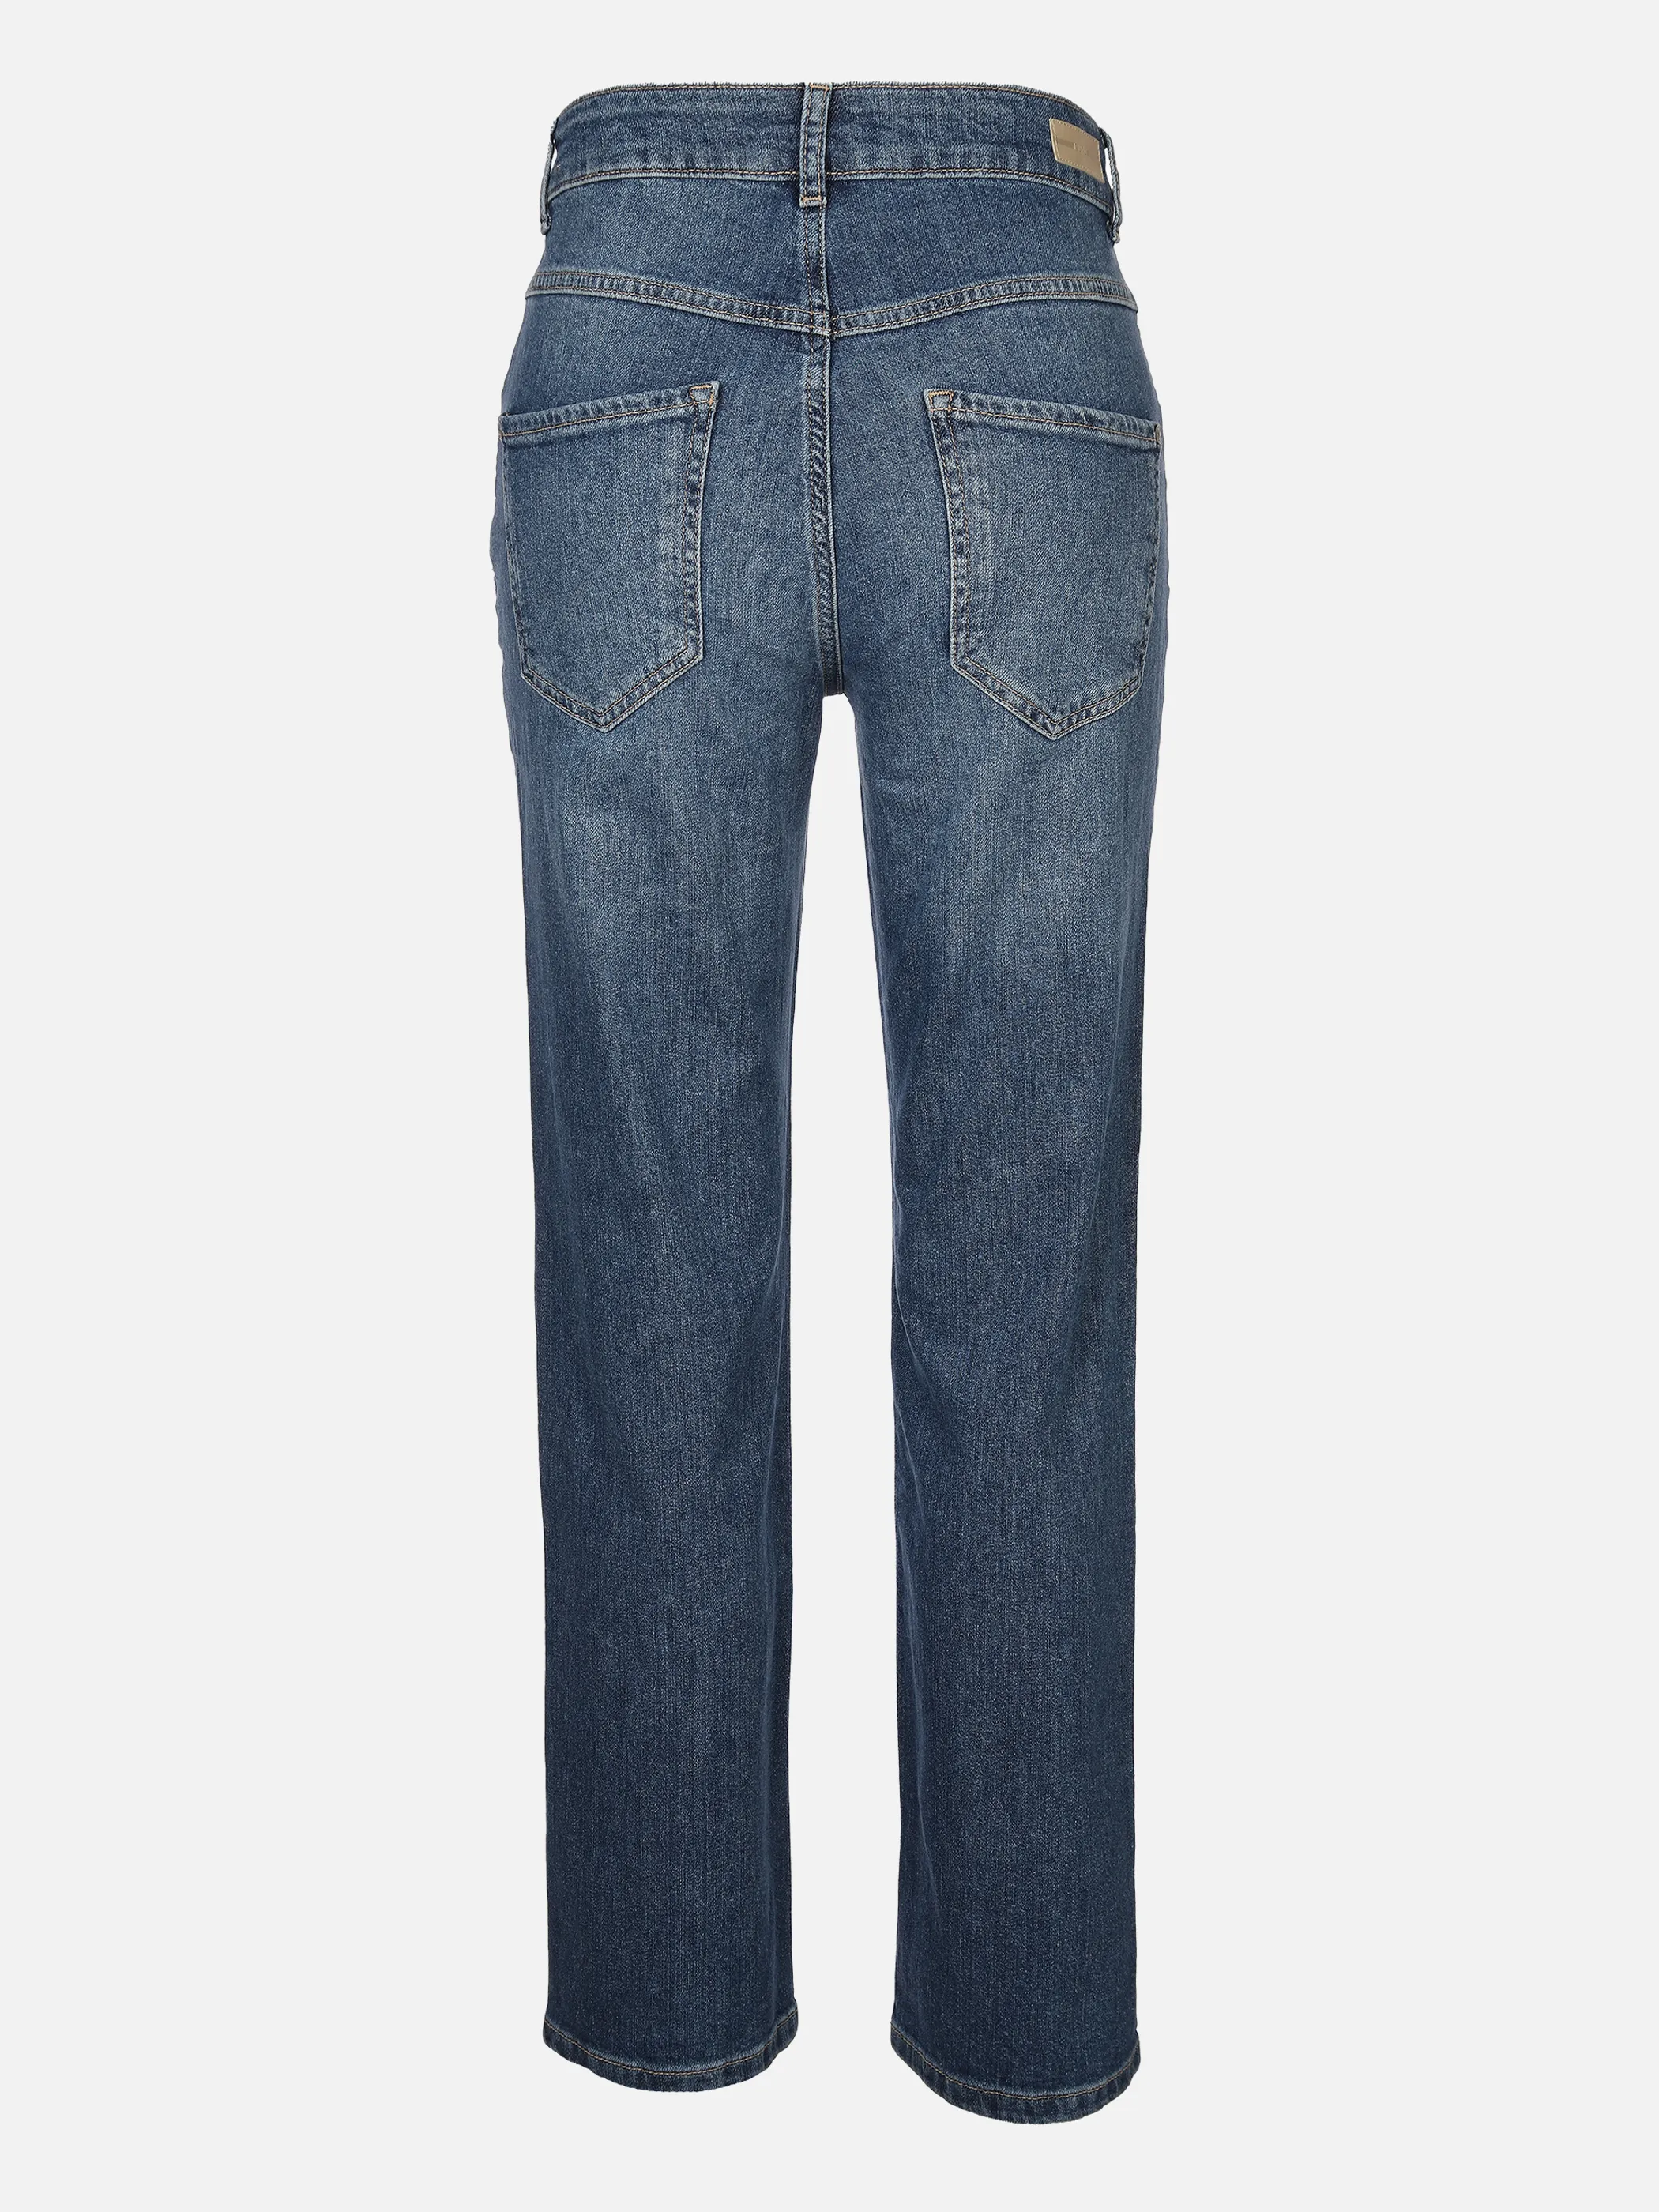 Sure Da-Jeans modern straight fit Blau 877968 MIDBLUE 2